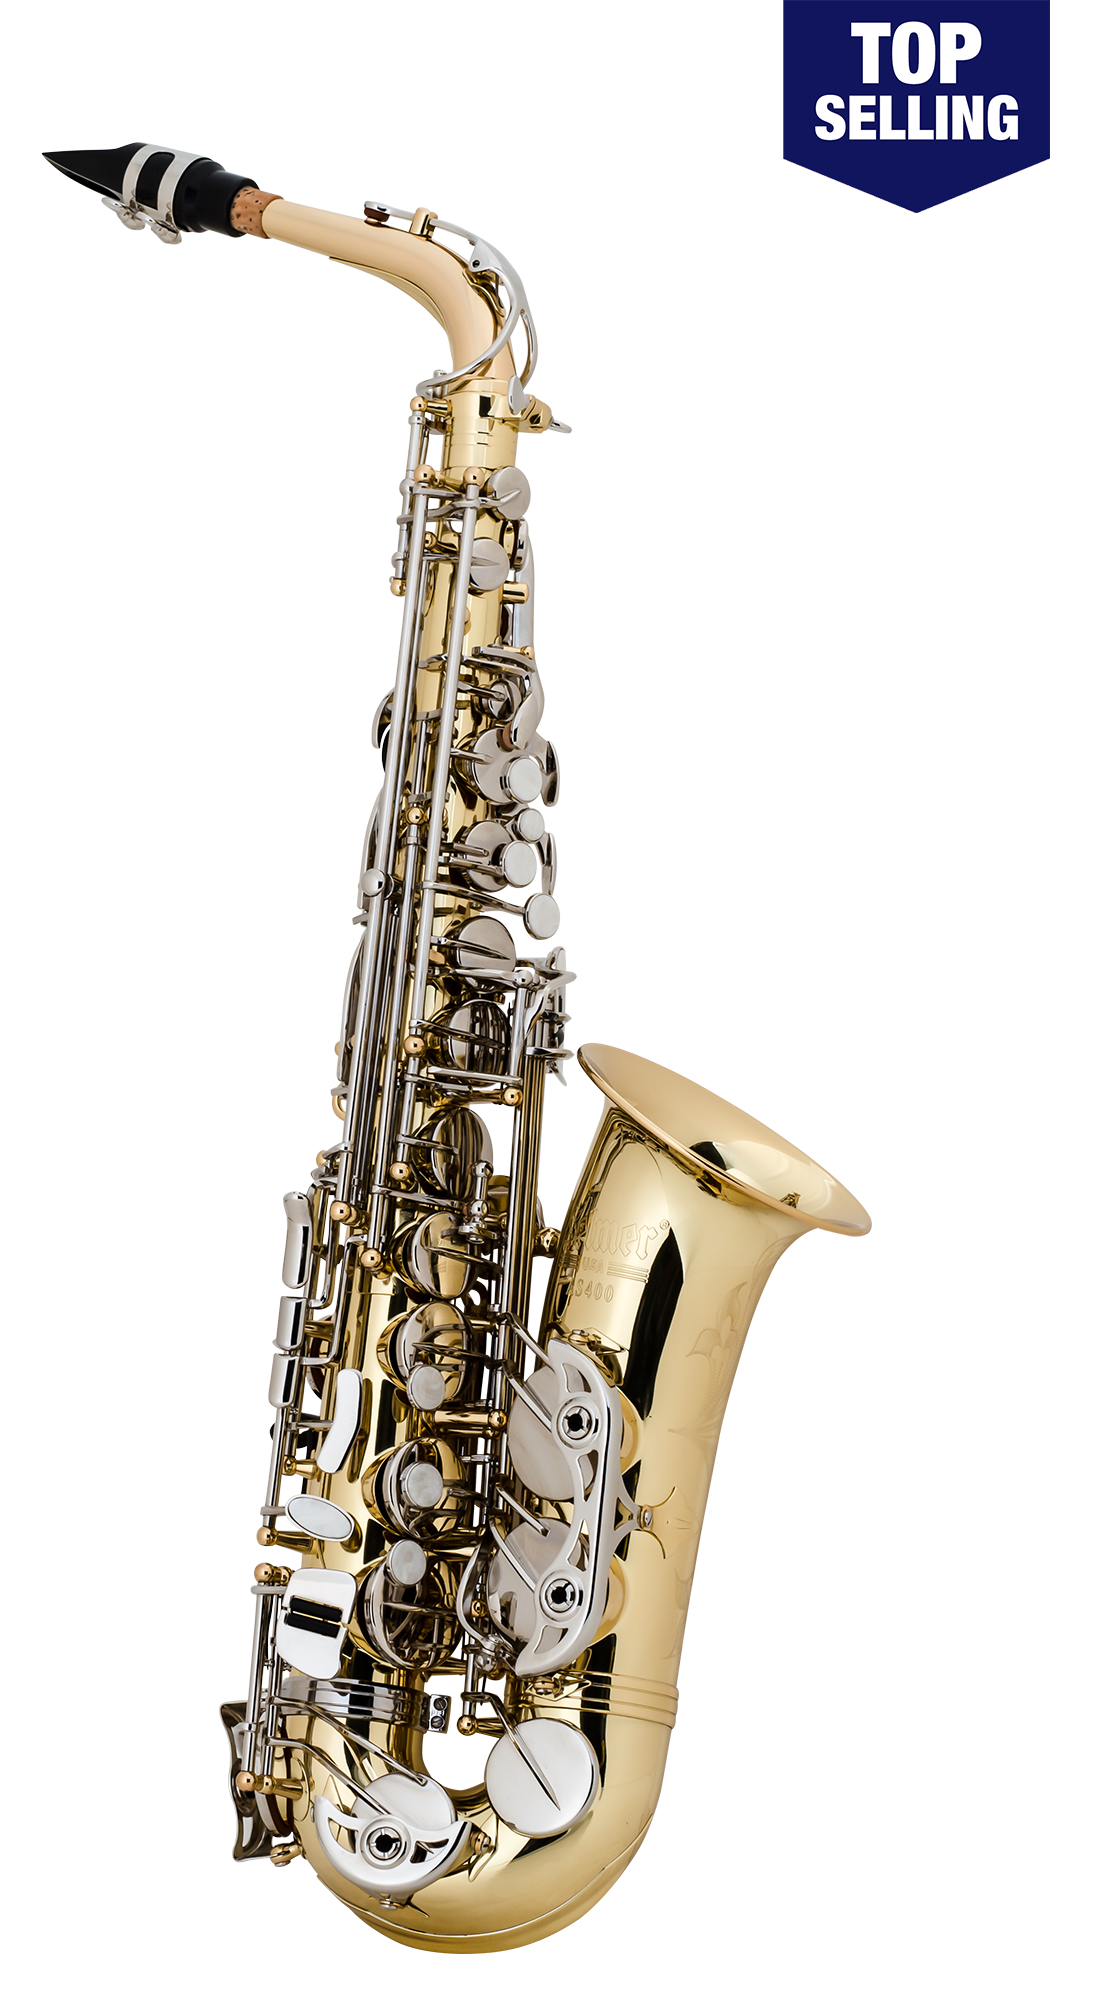 Selmer 400 Series Alto Saxophone